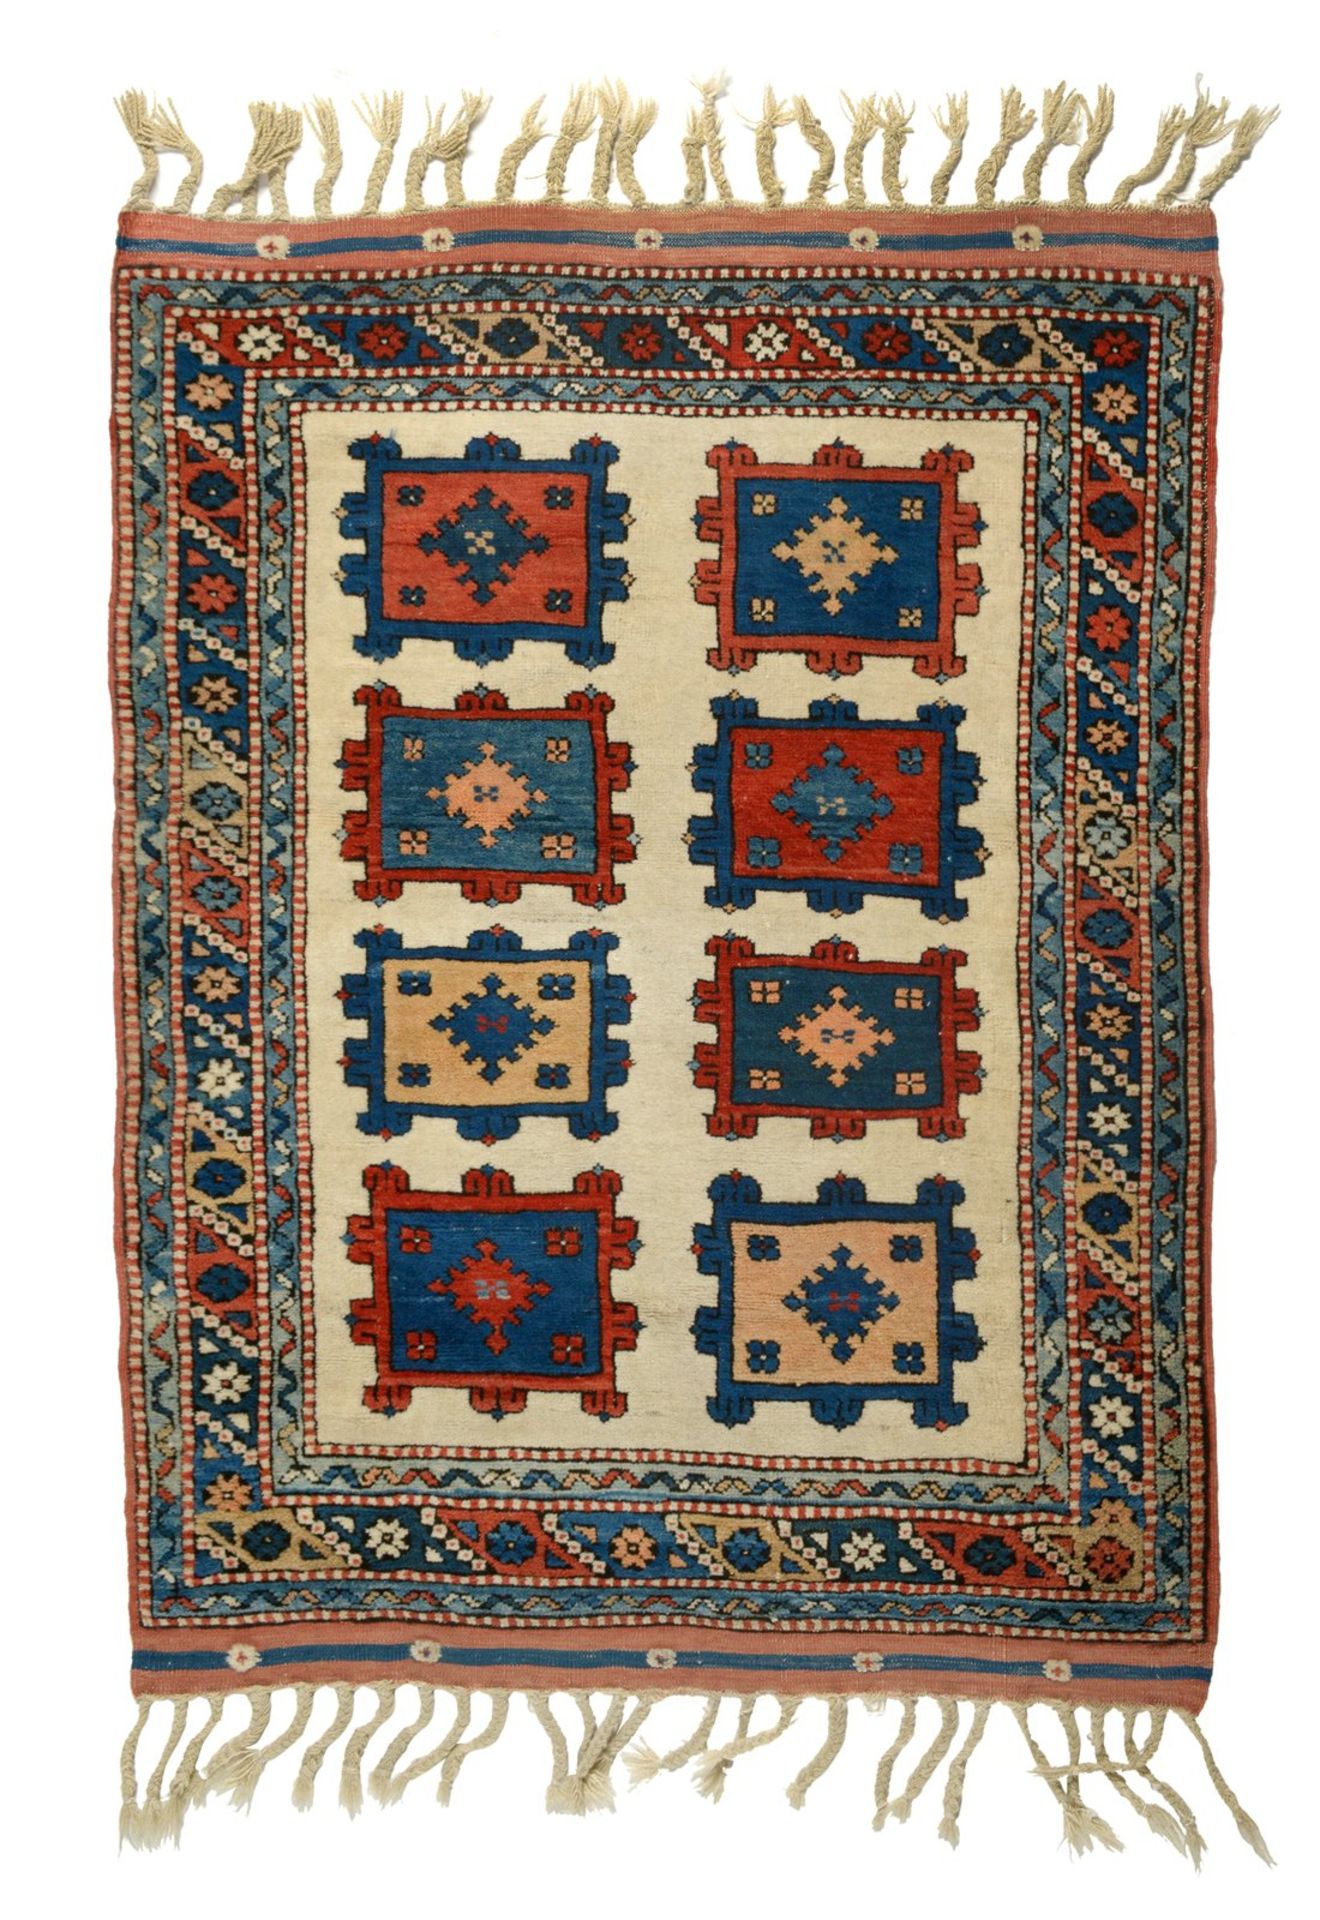 White ground carpet with medallion pattern